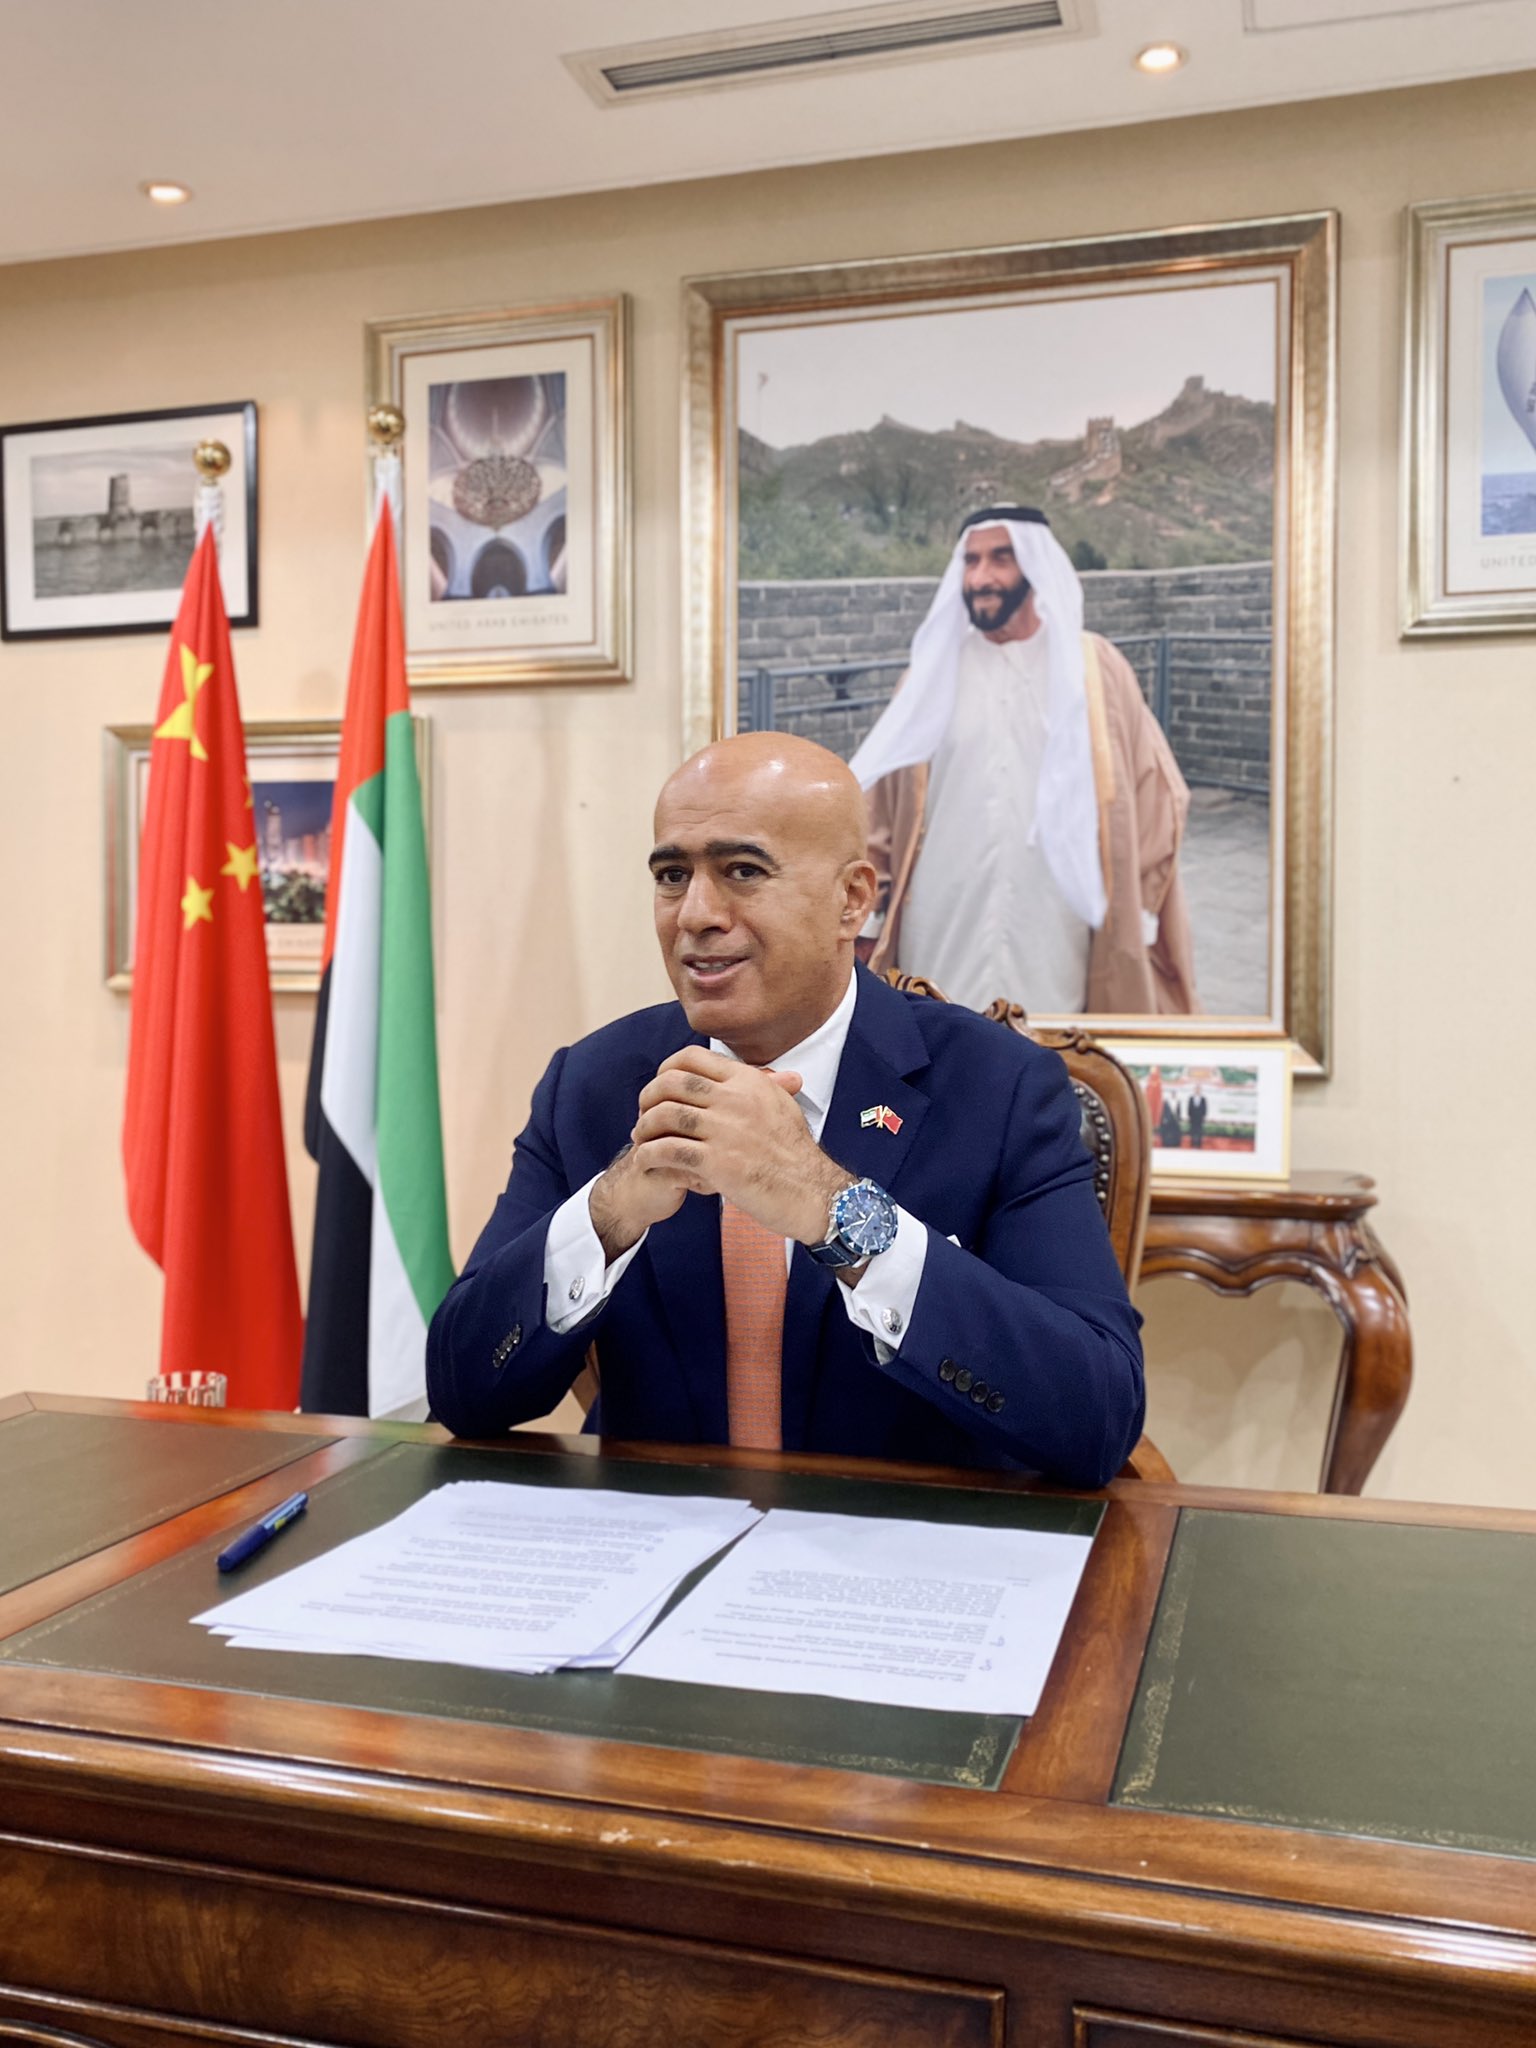 Mars missions from UAE and China reflect optimism on the horizon: UAE Ambassador to China